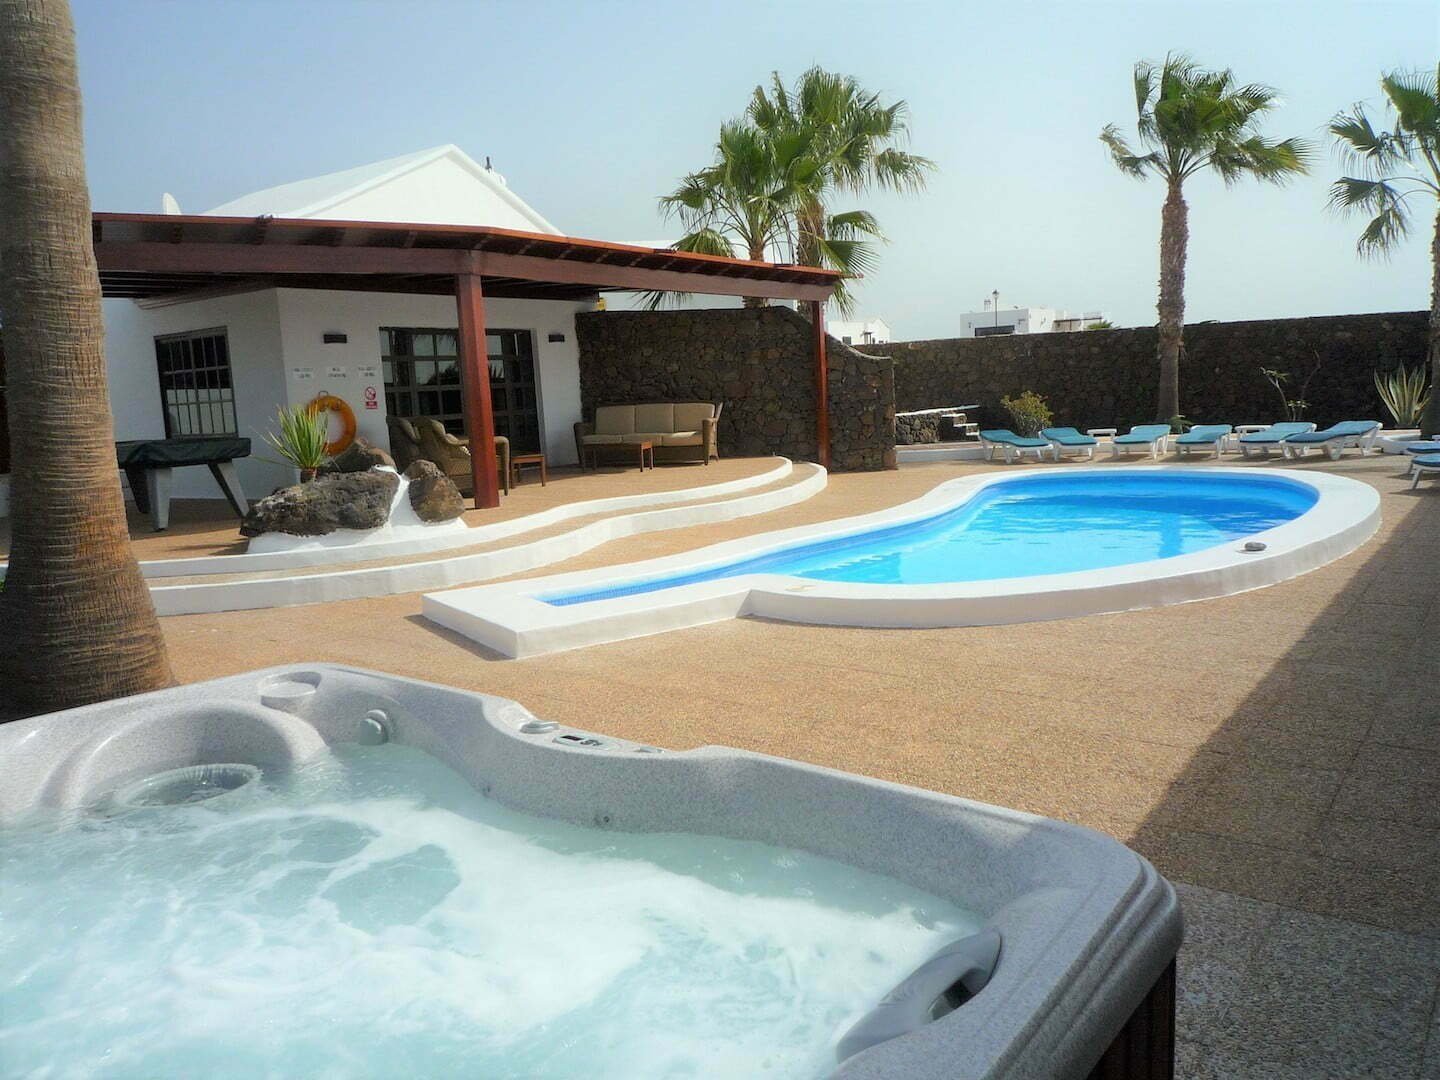 Villa Mayo - Lanzarote - Swimming Pool - Hot-Tub - Terrace Area